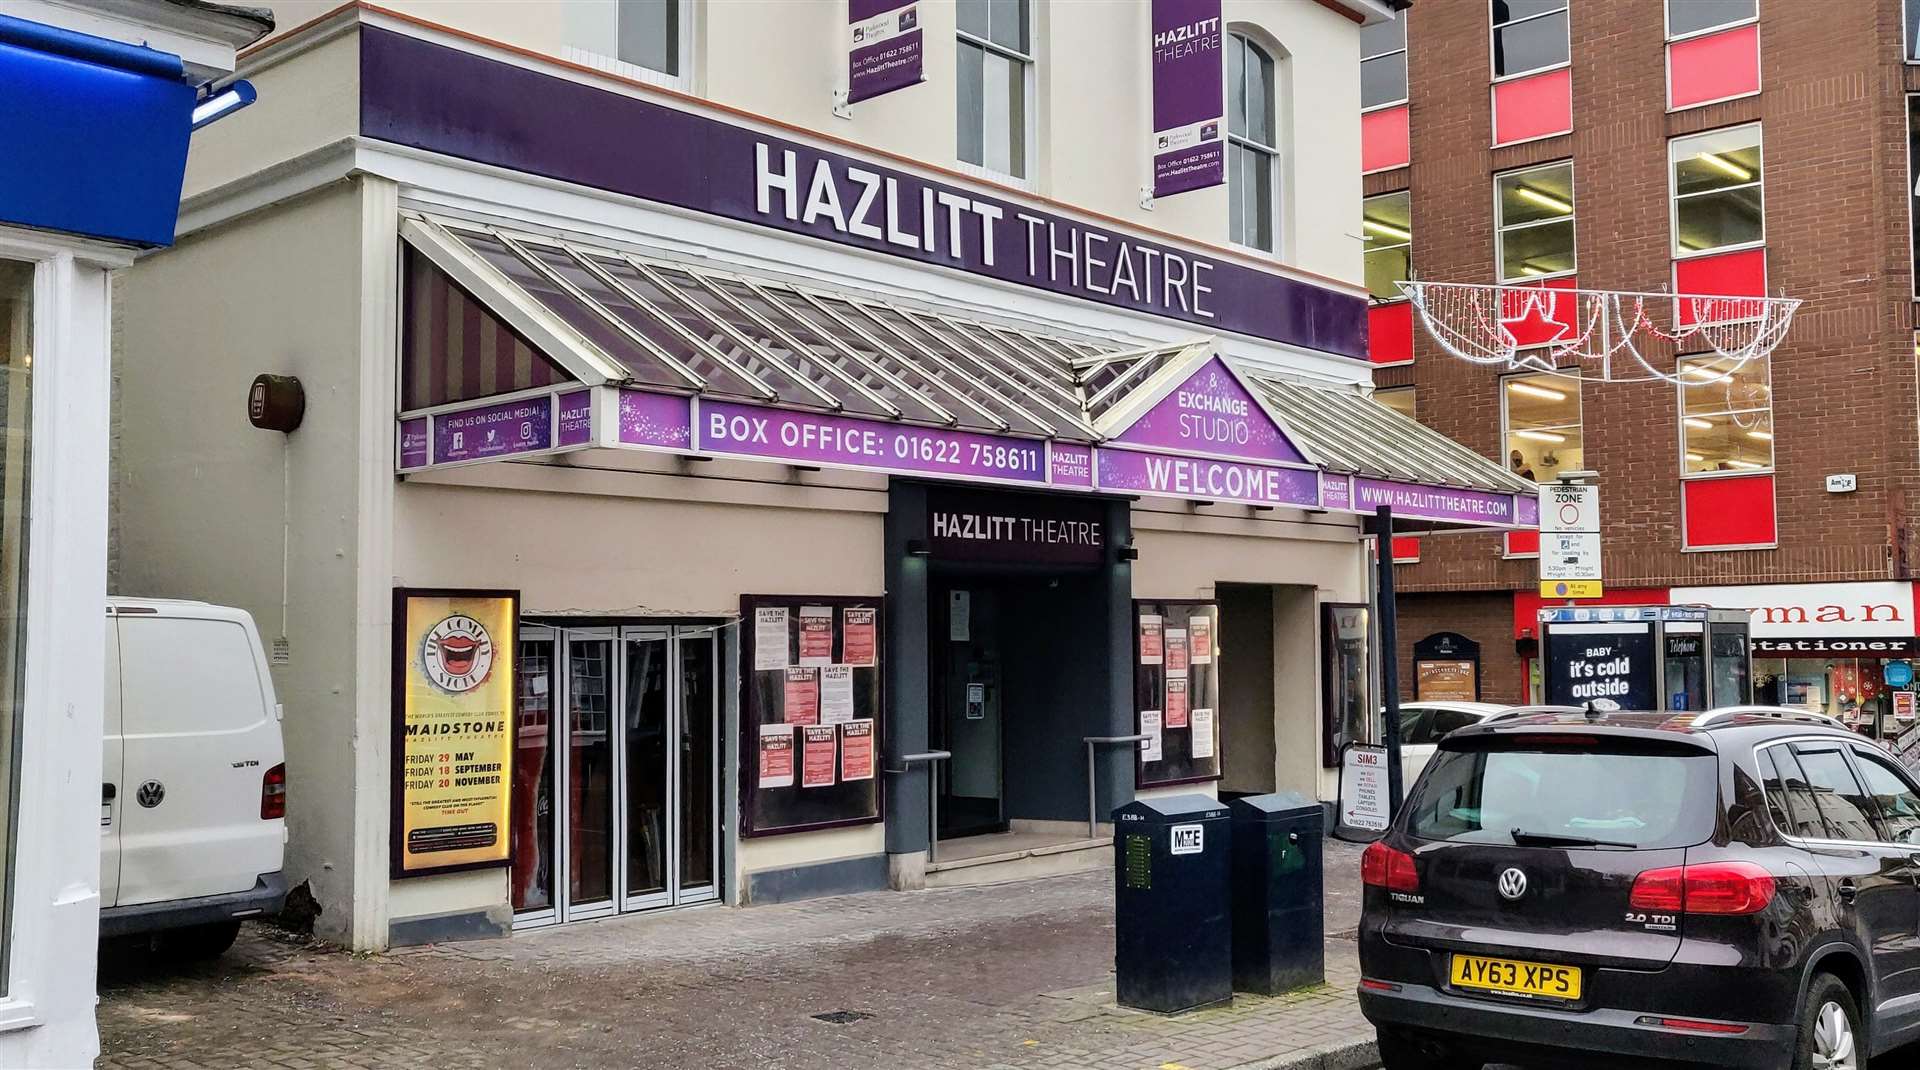 The Hazlitt Theatre in Maidstone